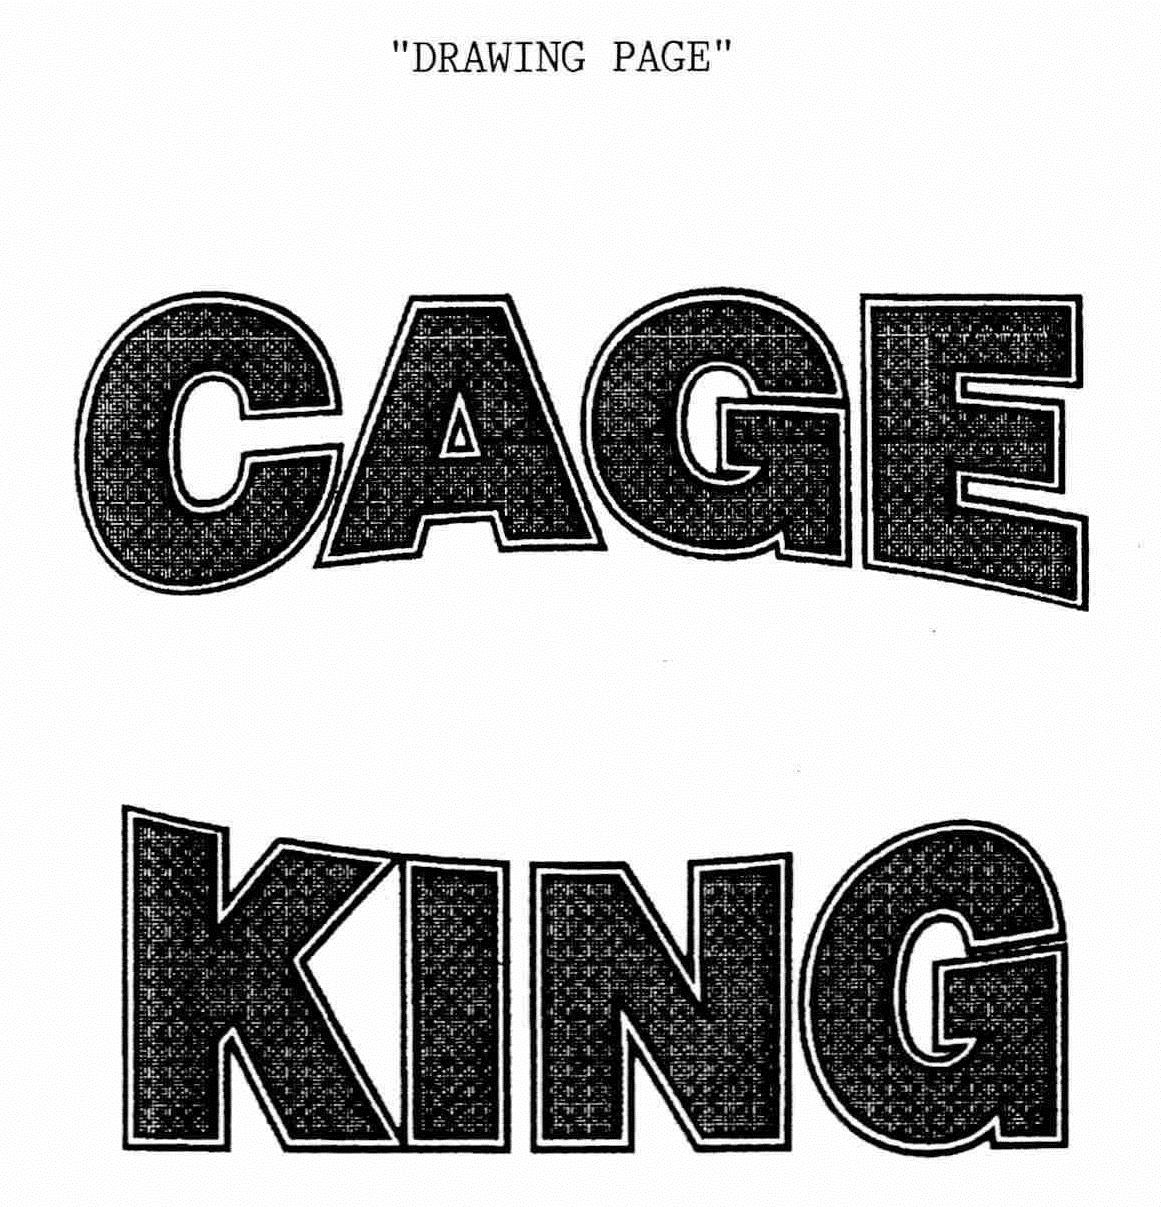 Trademark Logo CAGE KING